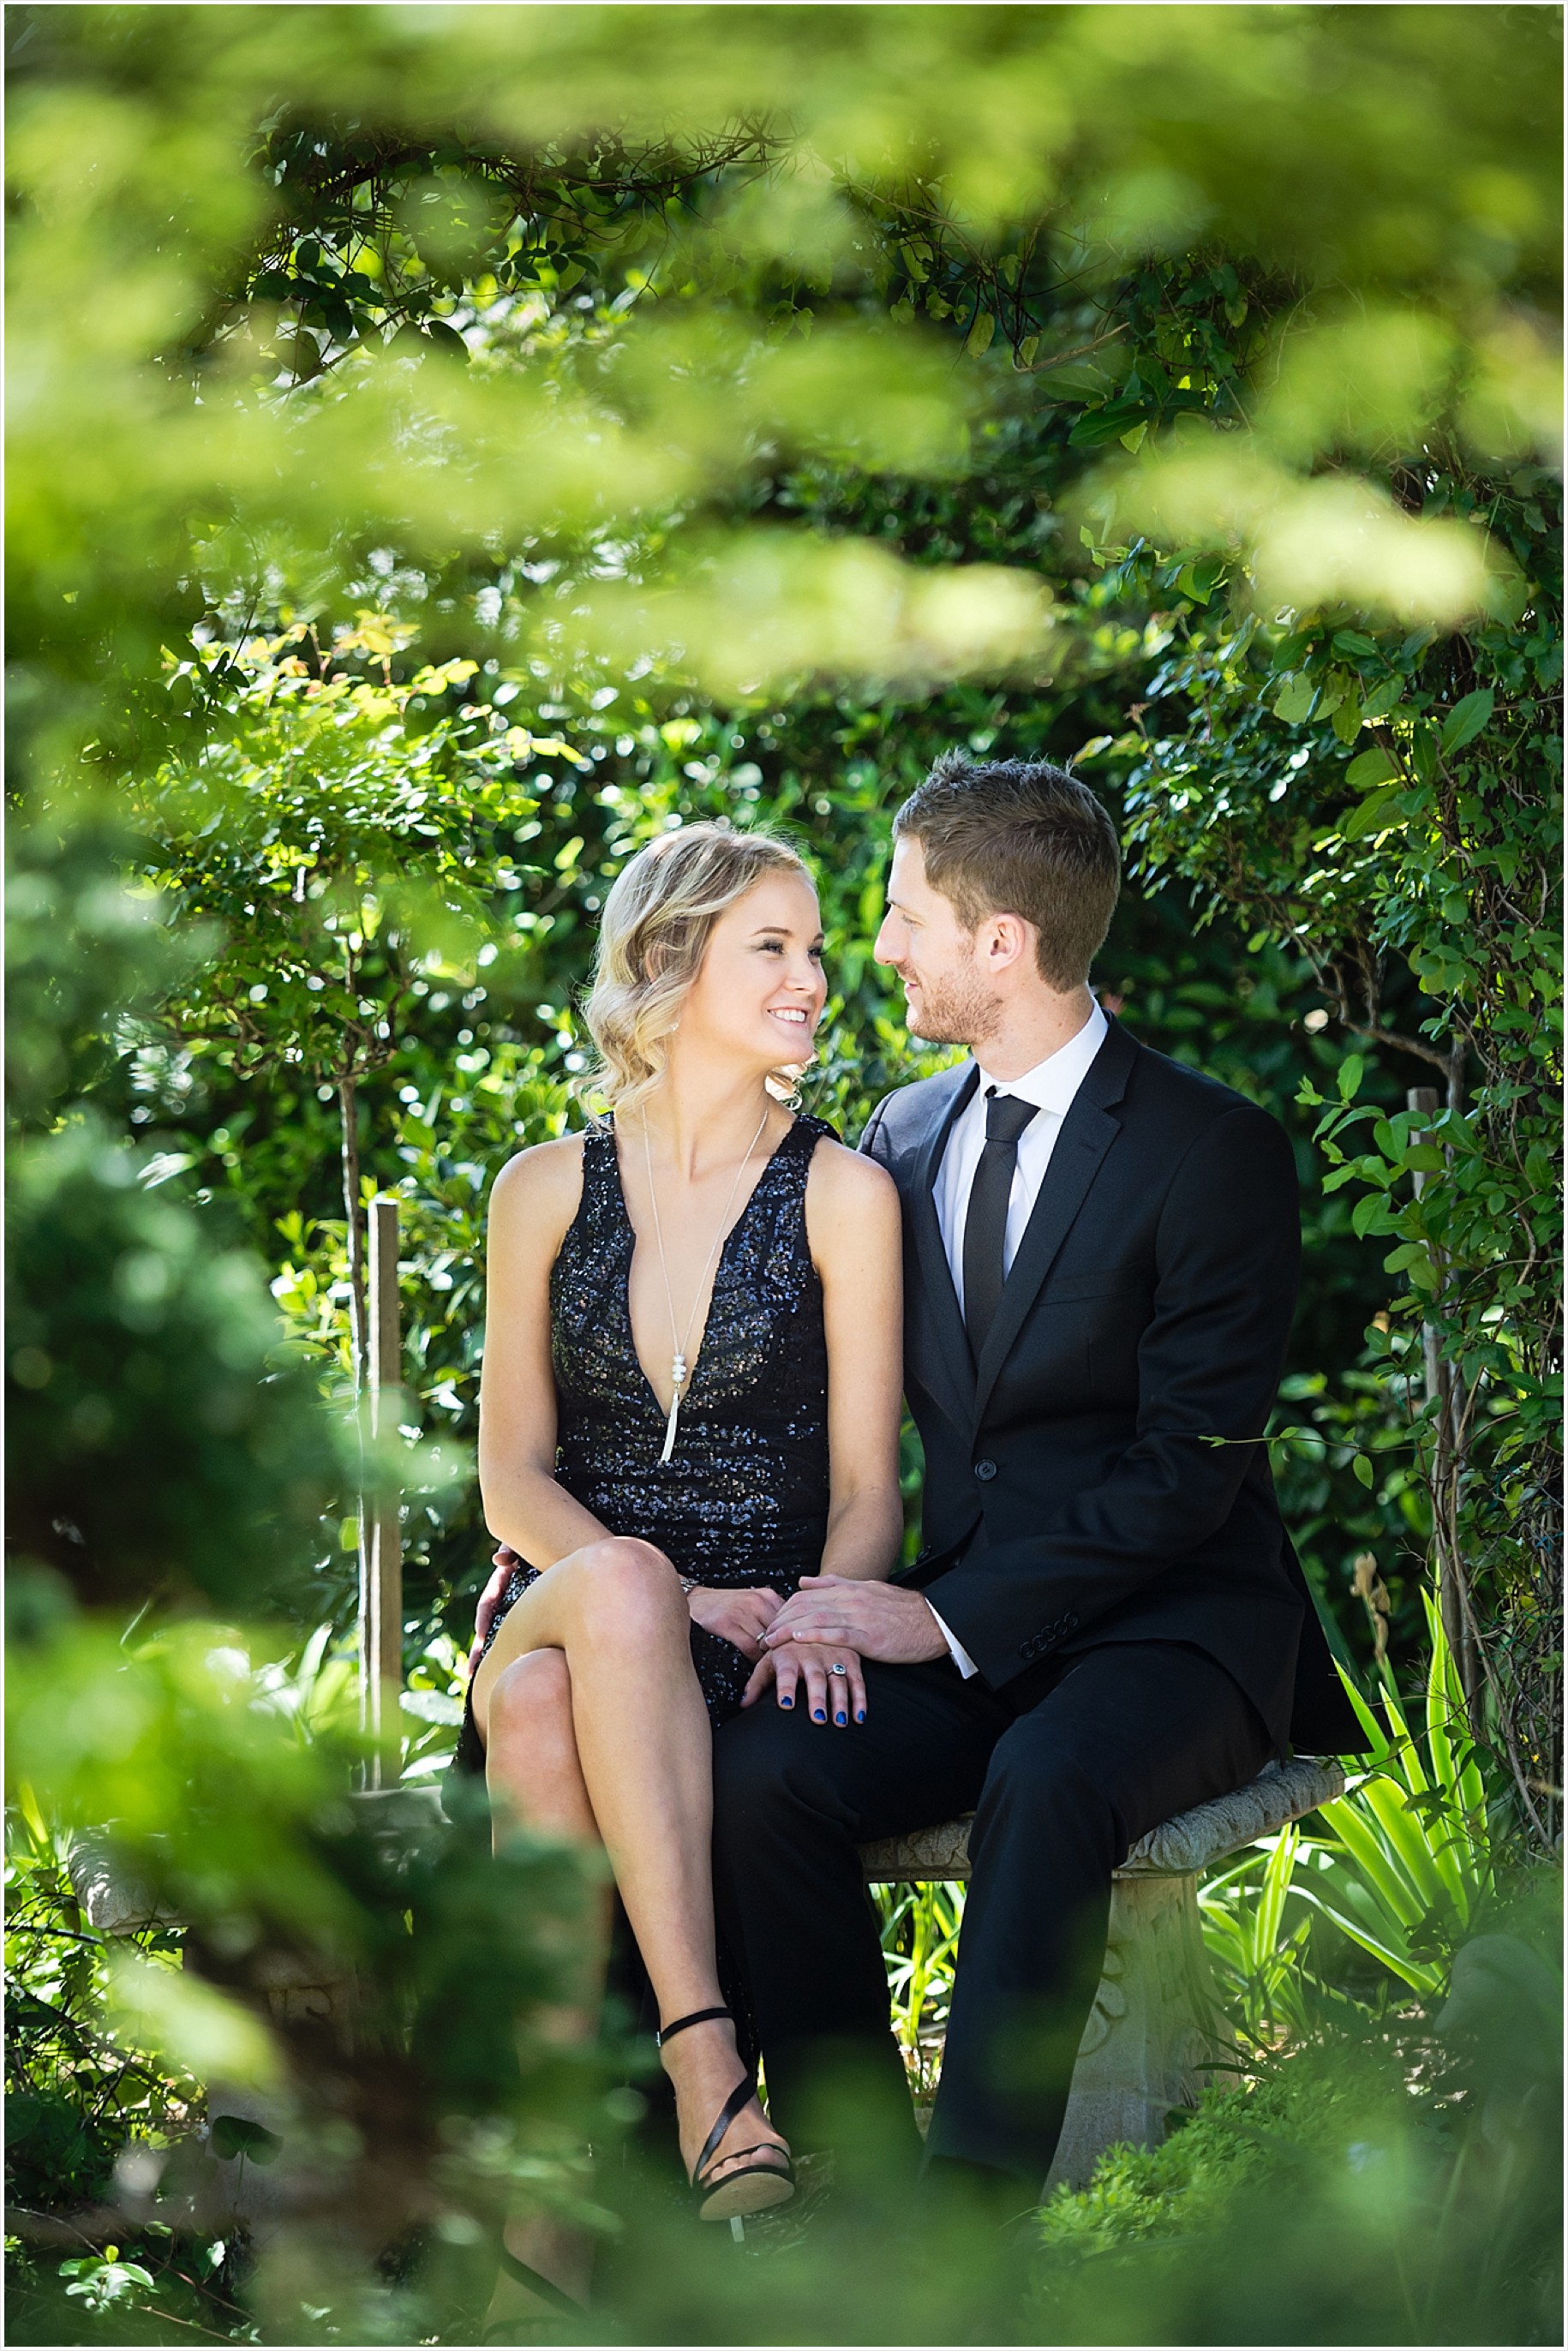 https://jadenorwood.com/wp-content/uploads/2014/11/11-7278-post/sexy-luxury-engagement-couple-photos_011.jpg